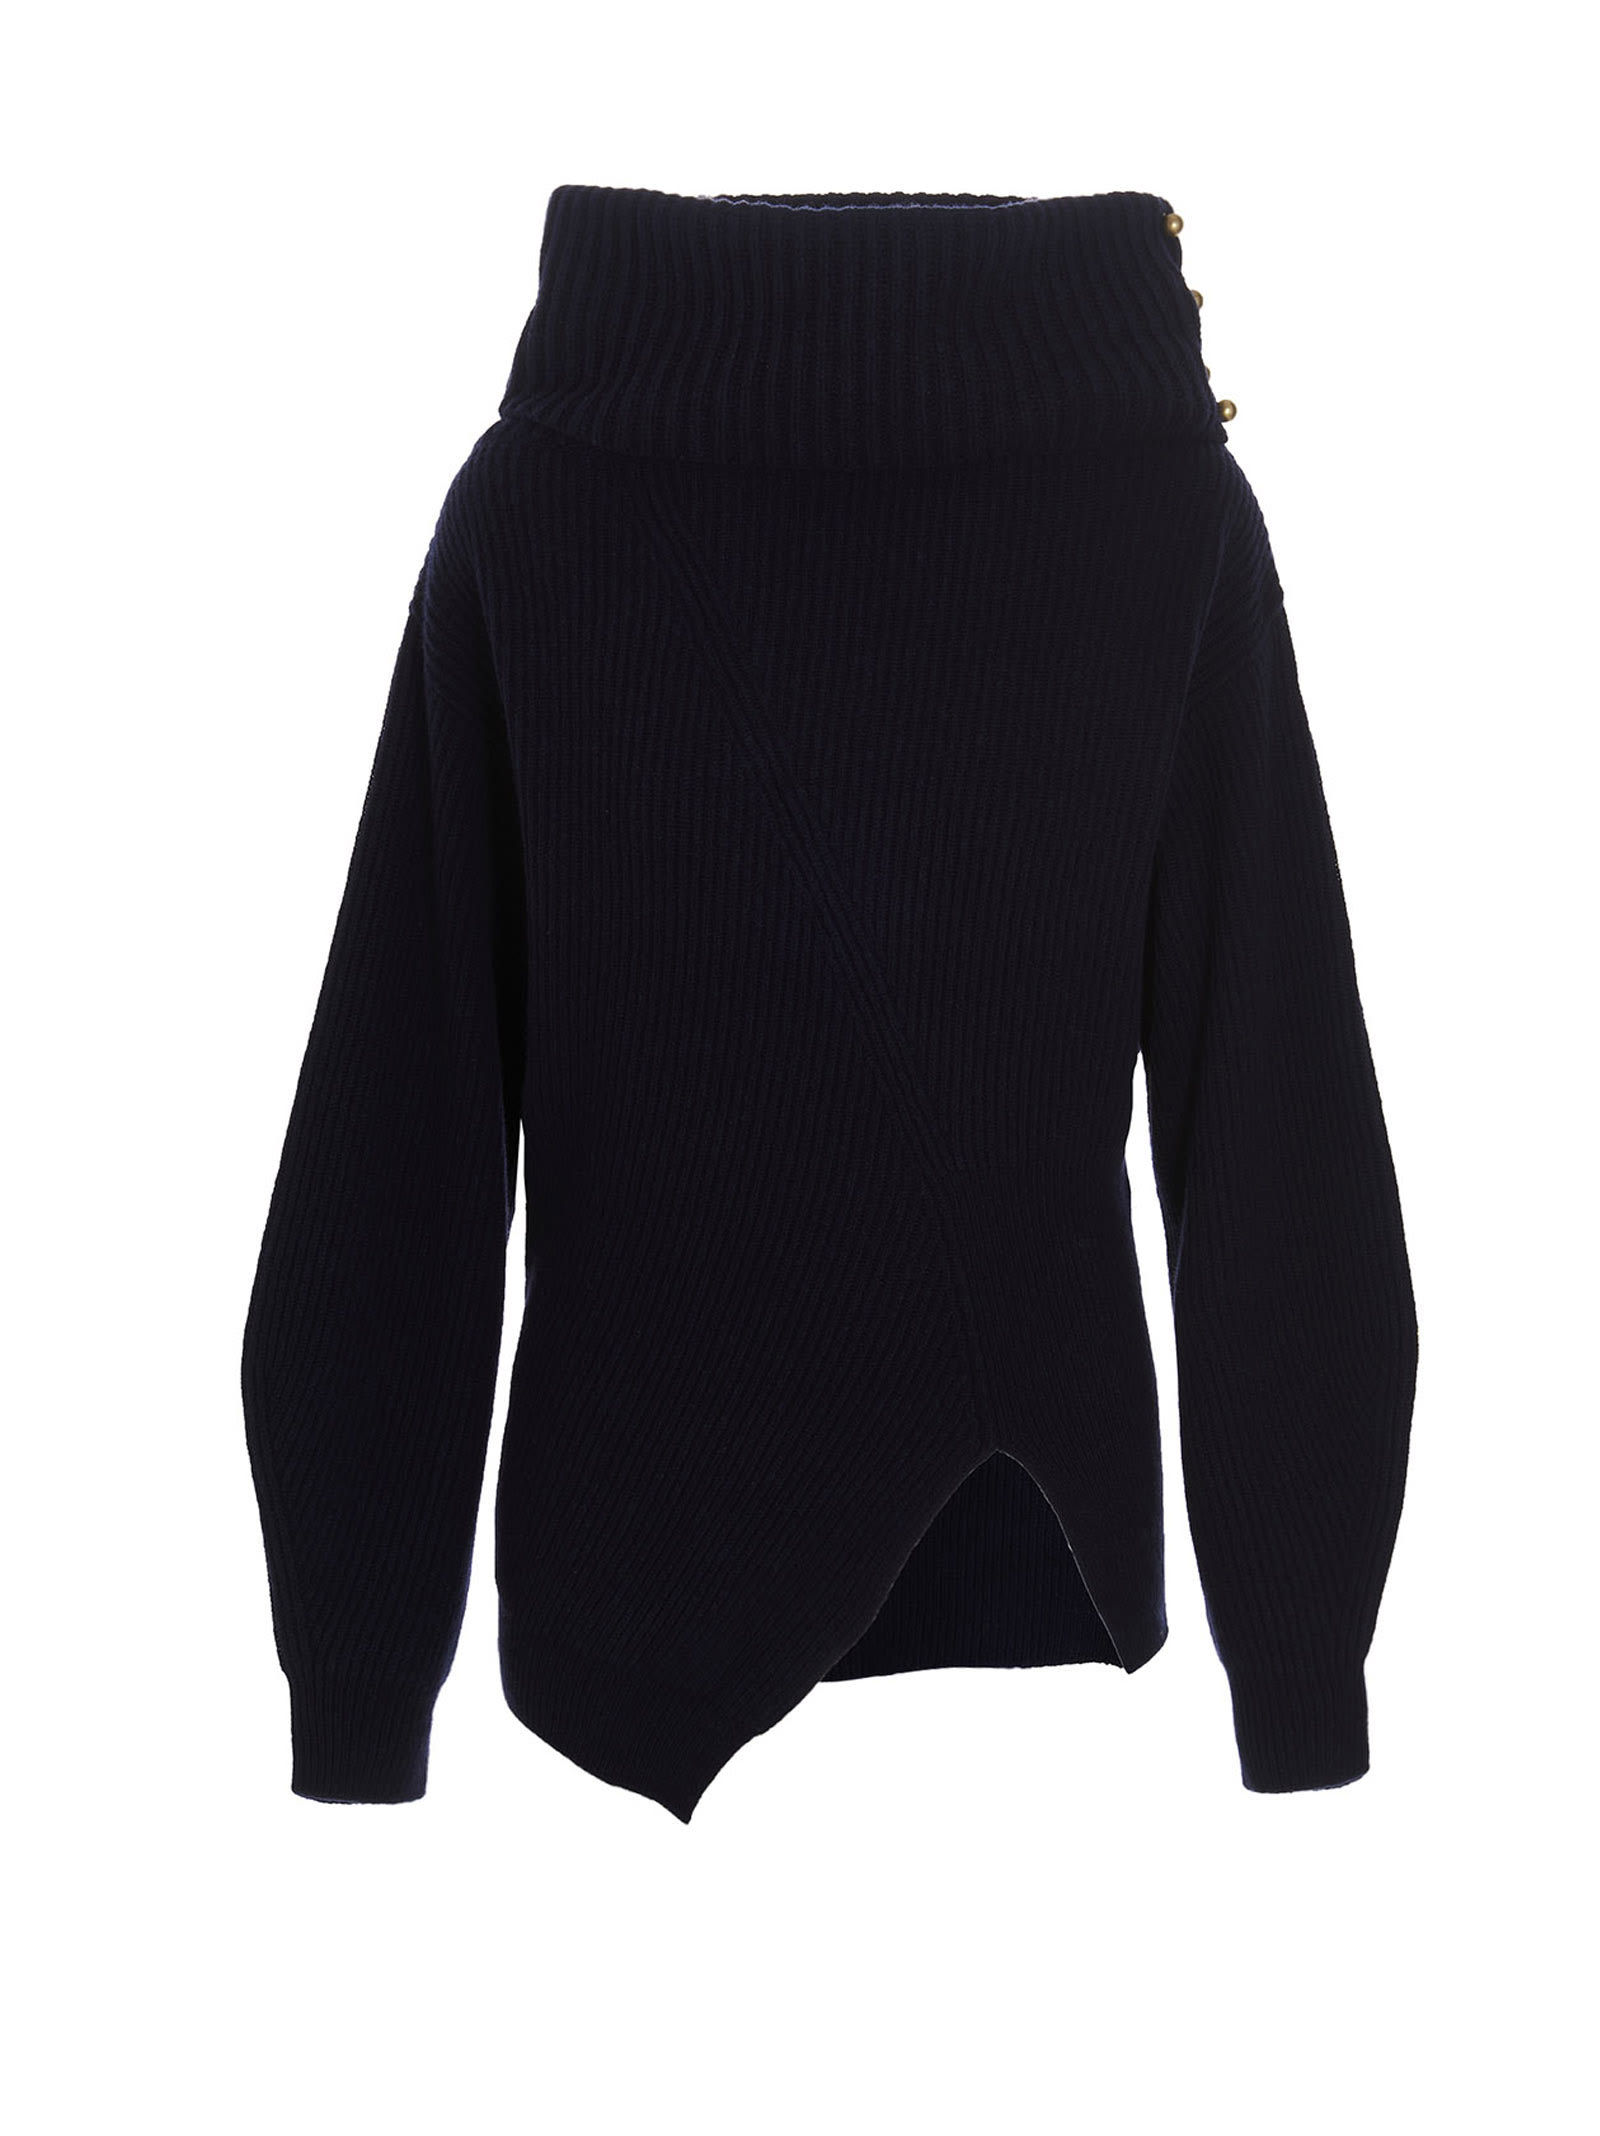 Stella McCartney Buttoned Cashmere Sweater